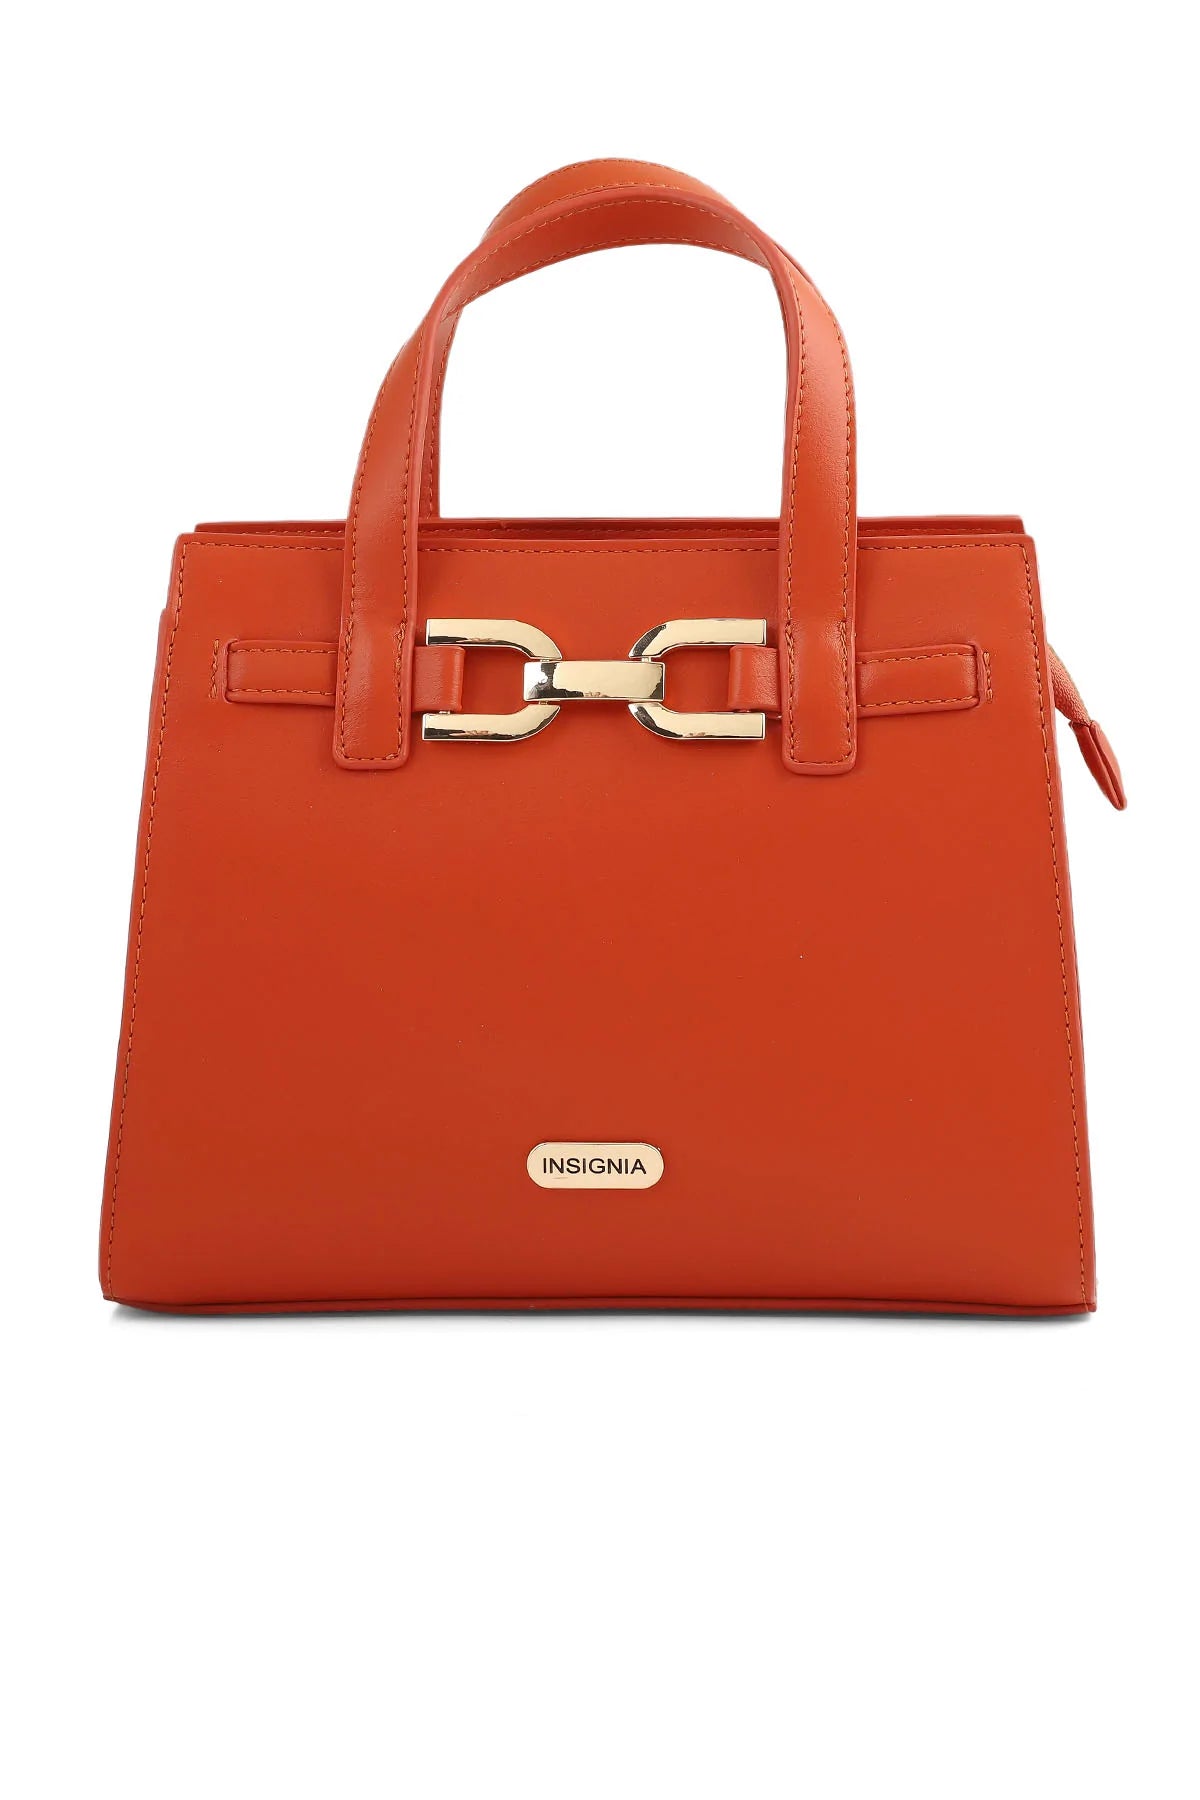 Formal Tote Hand Bags B15016-Orange